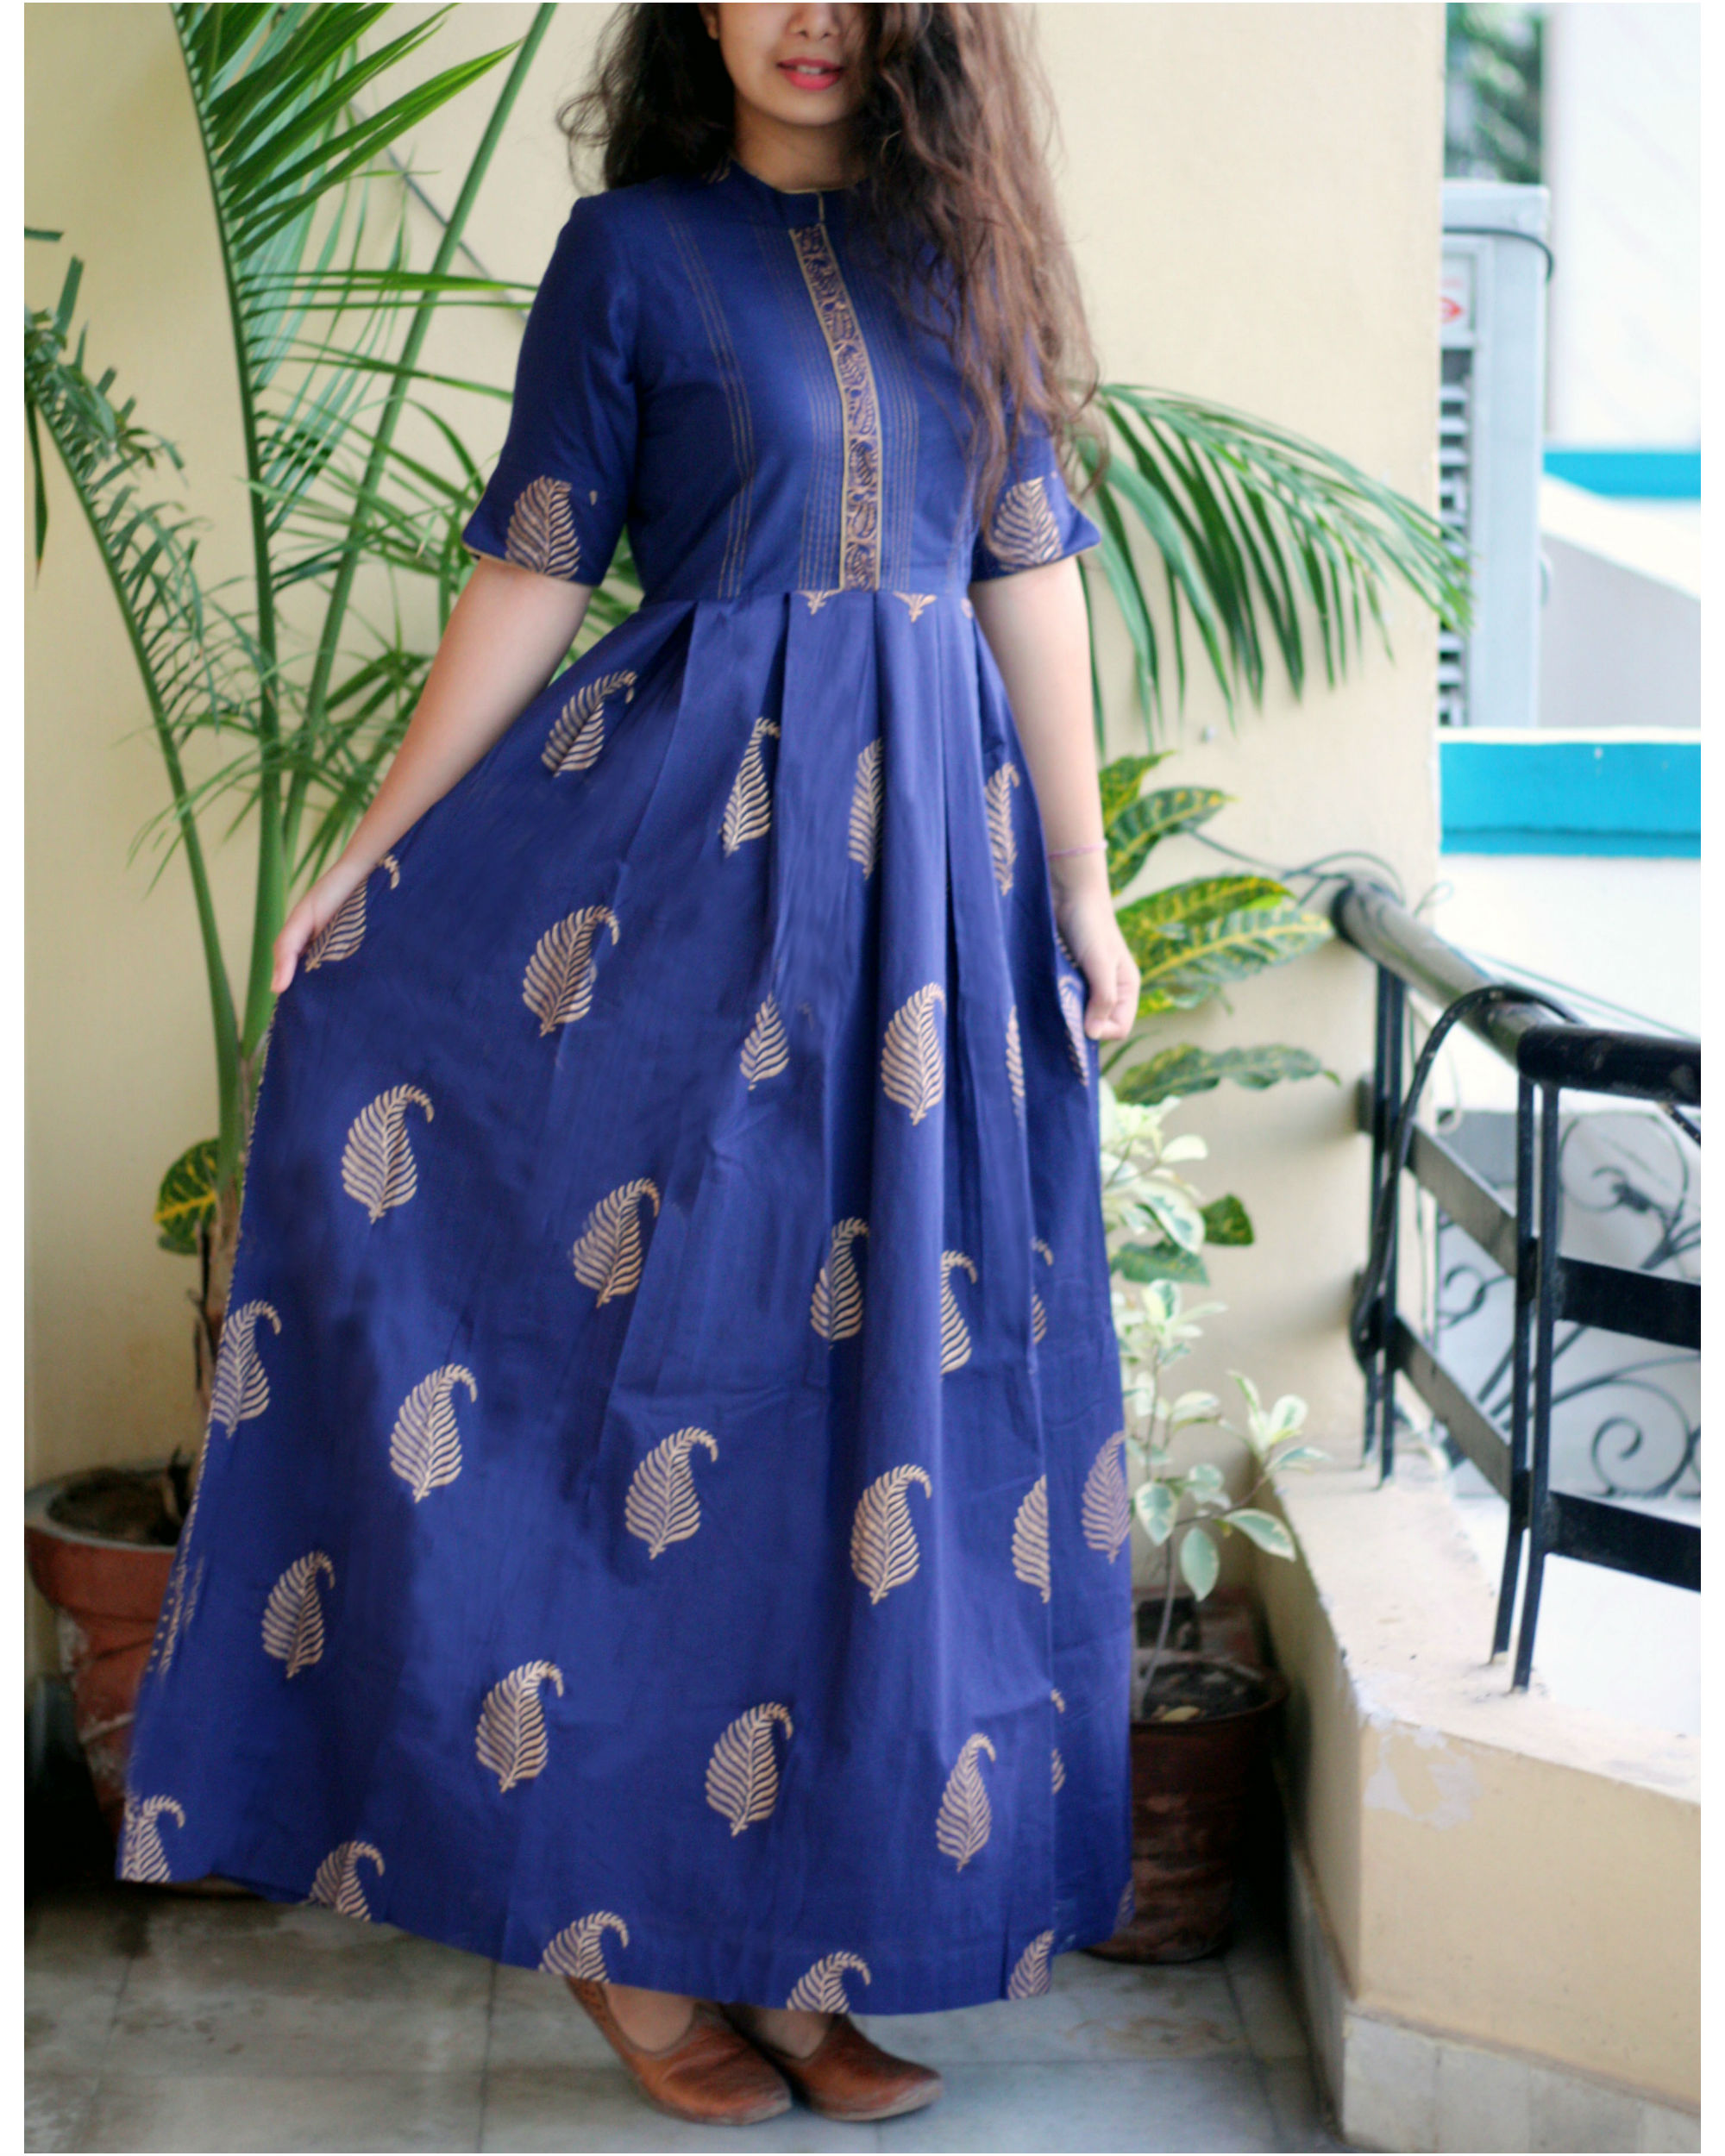 Blue leaf print maxi dress by Label Shivani Vyas | The Secret Label